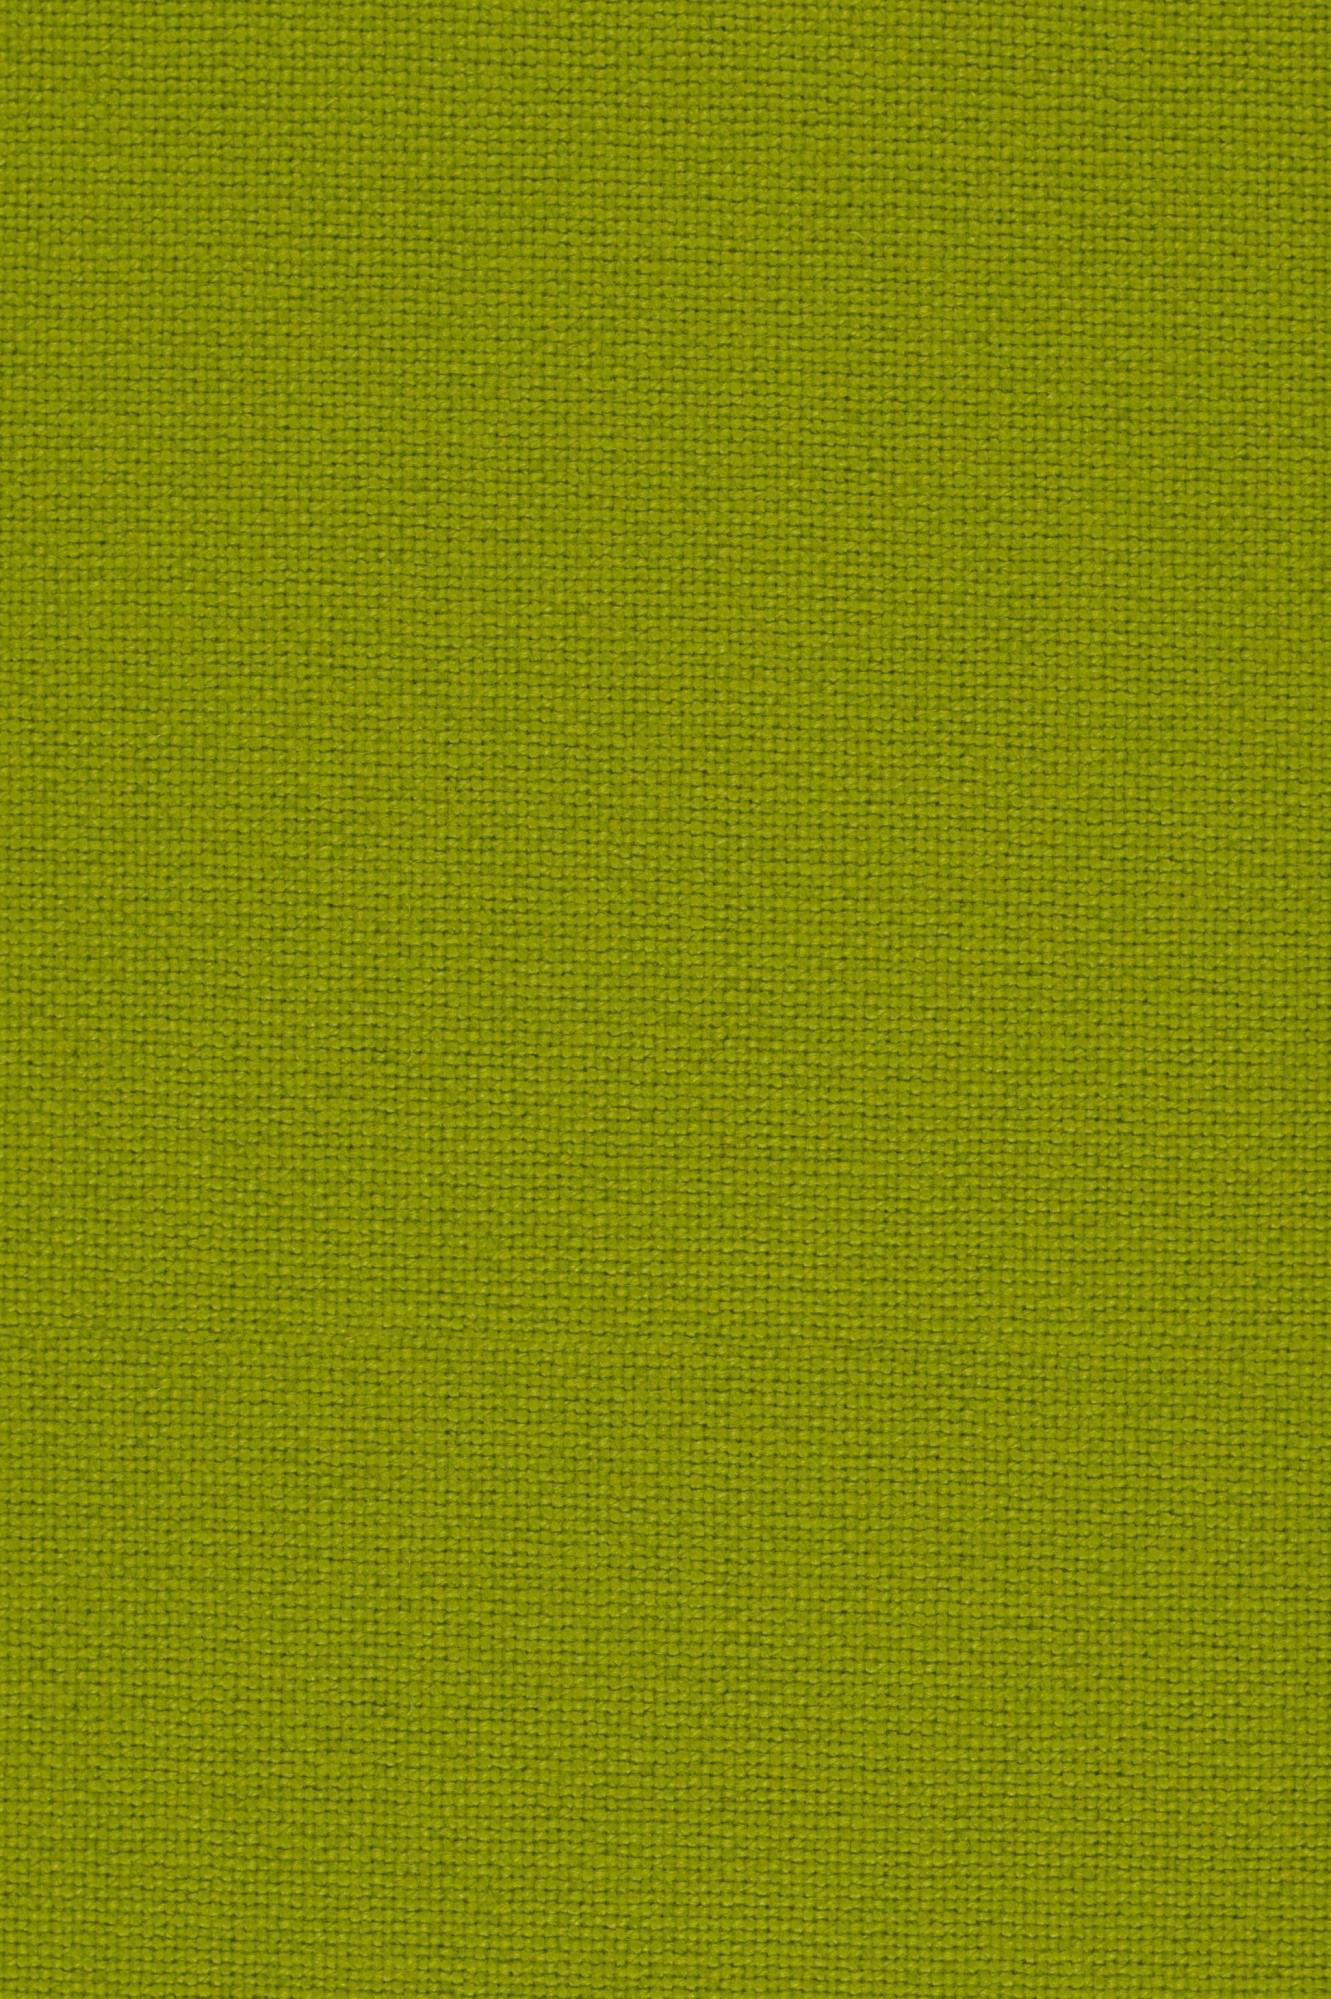 Fabric sample Hallingdal 65 907 green